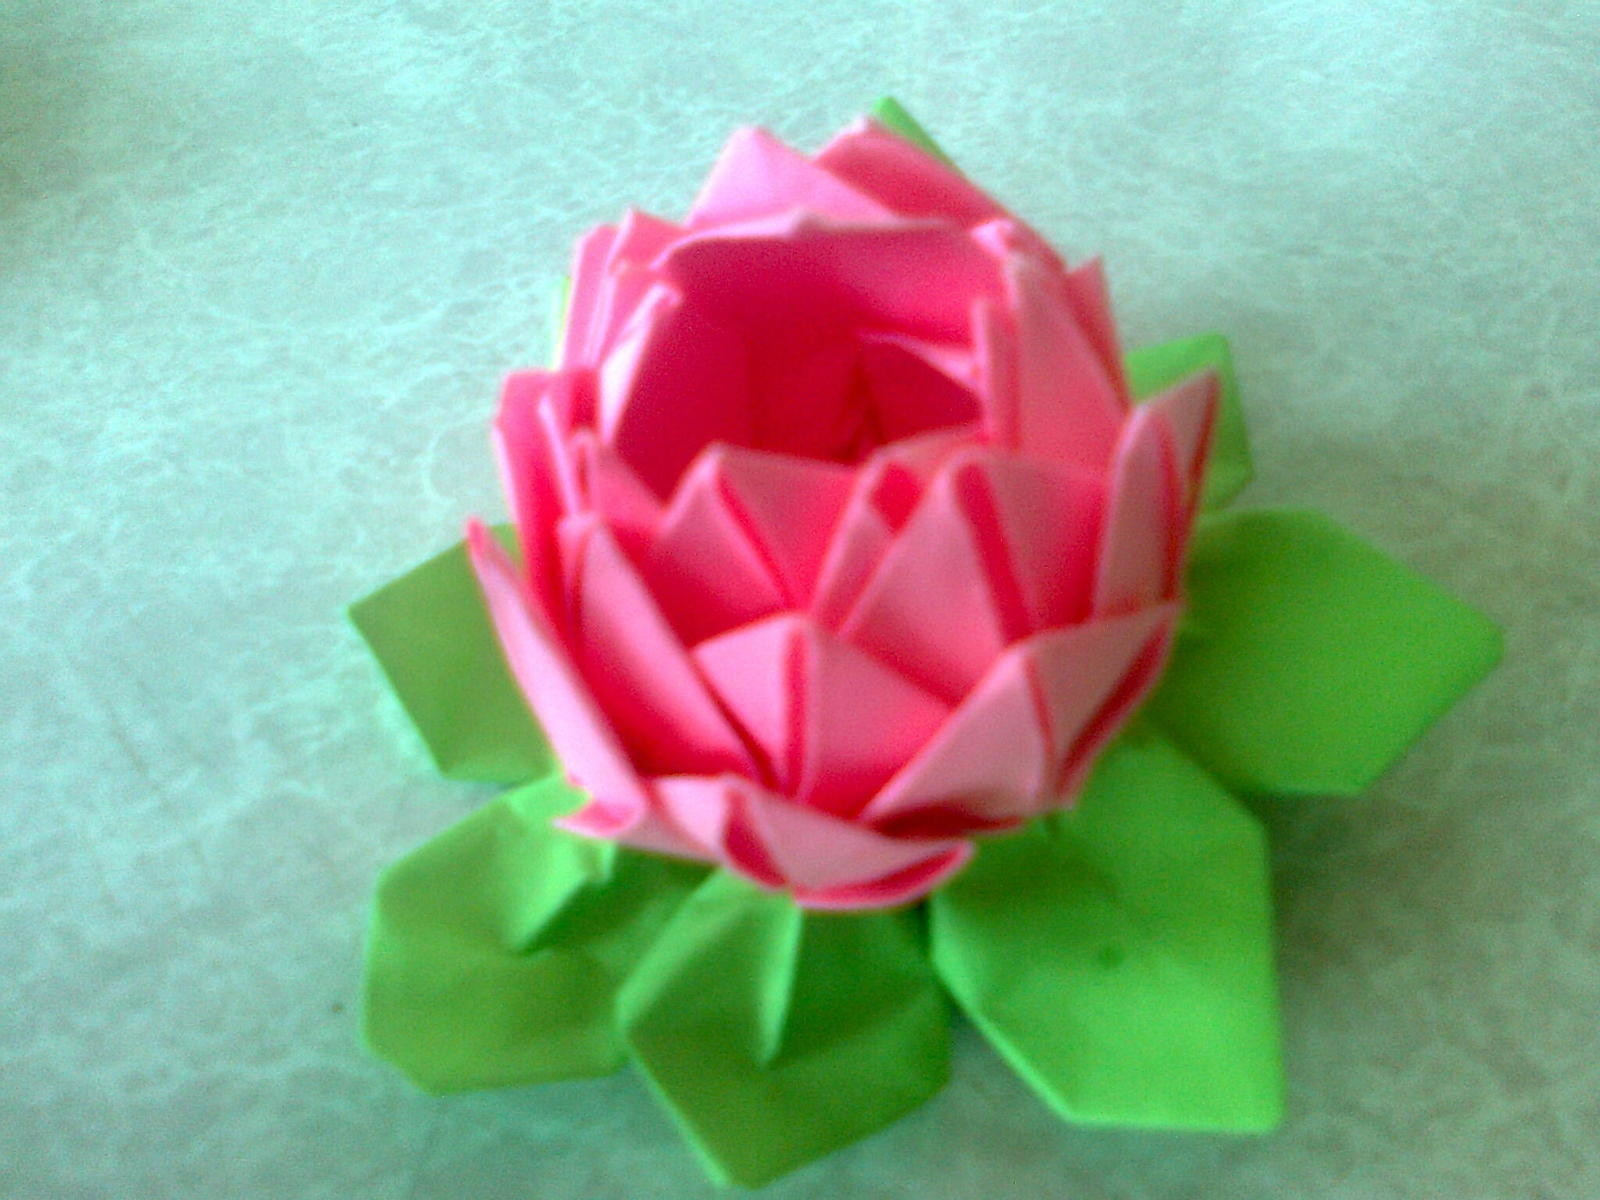 Lotus Flower Origami Lotus Flower Spring Tutorial How To Fold An Origami Lotus